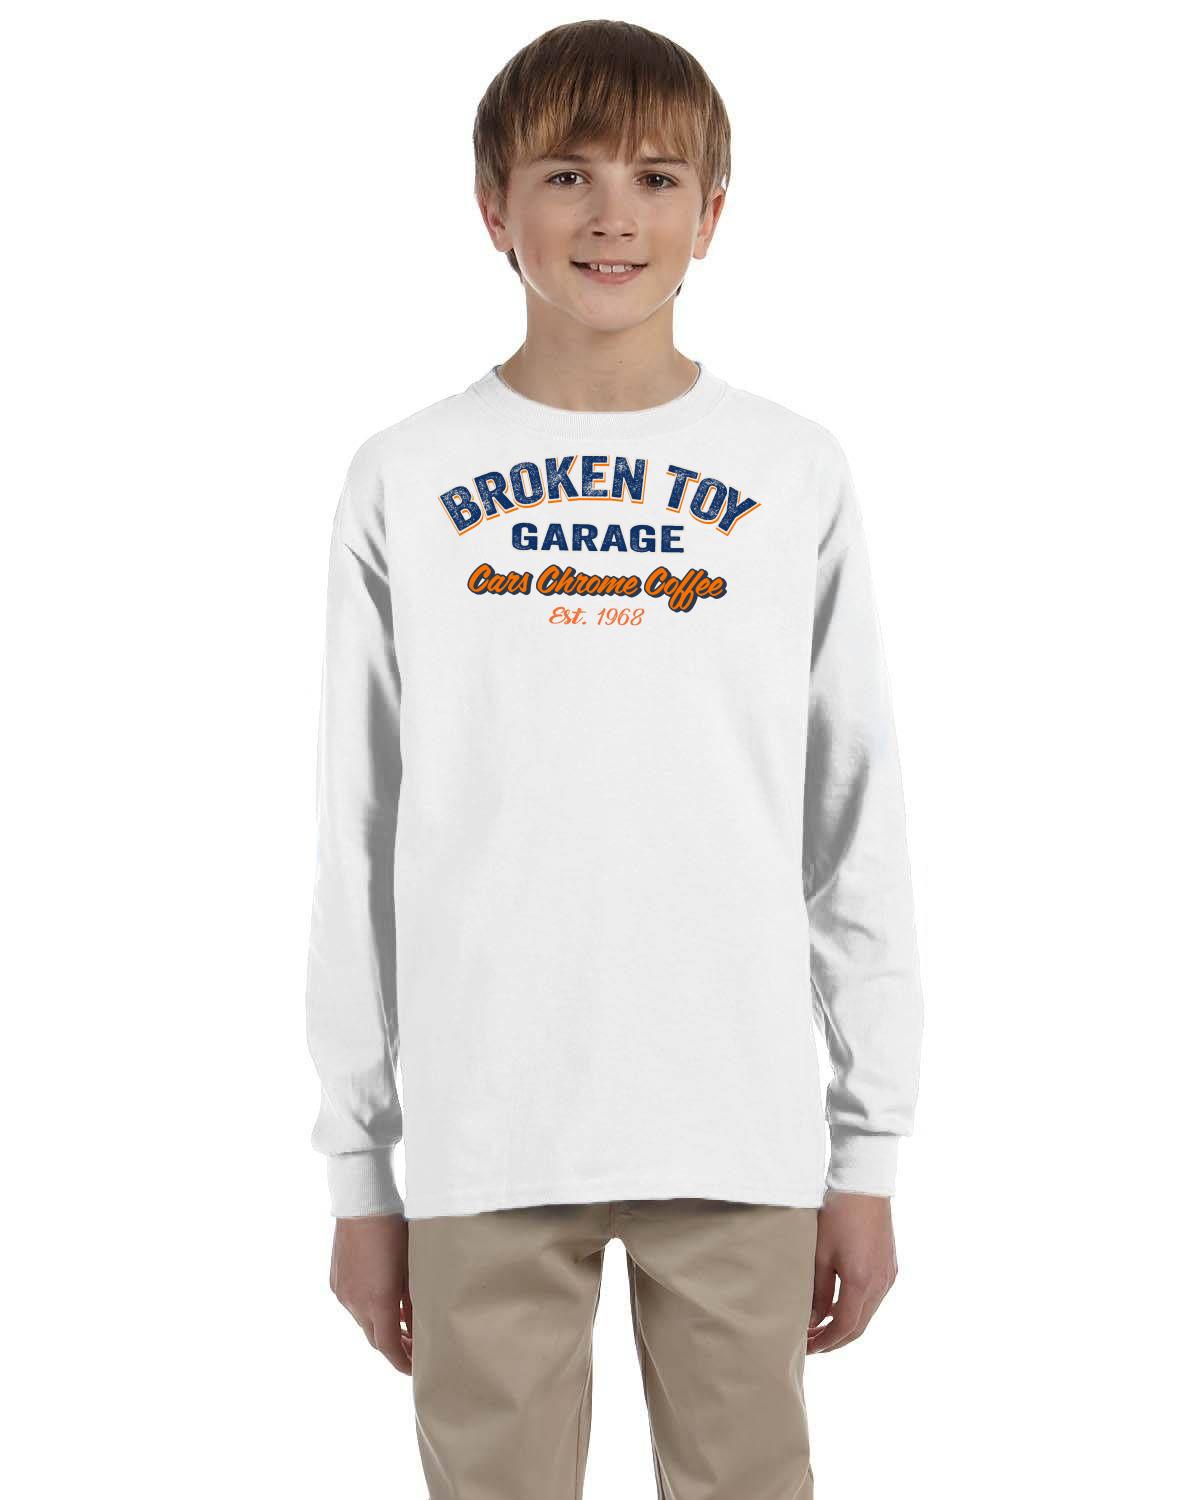 Broken Toy Garage Youth Long-Sleeve T-Shirt